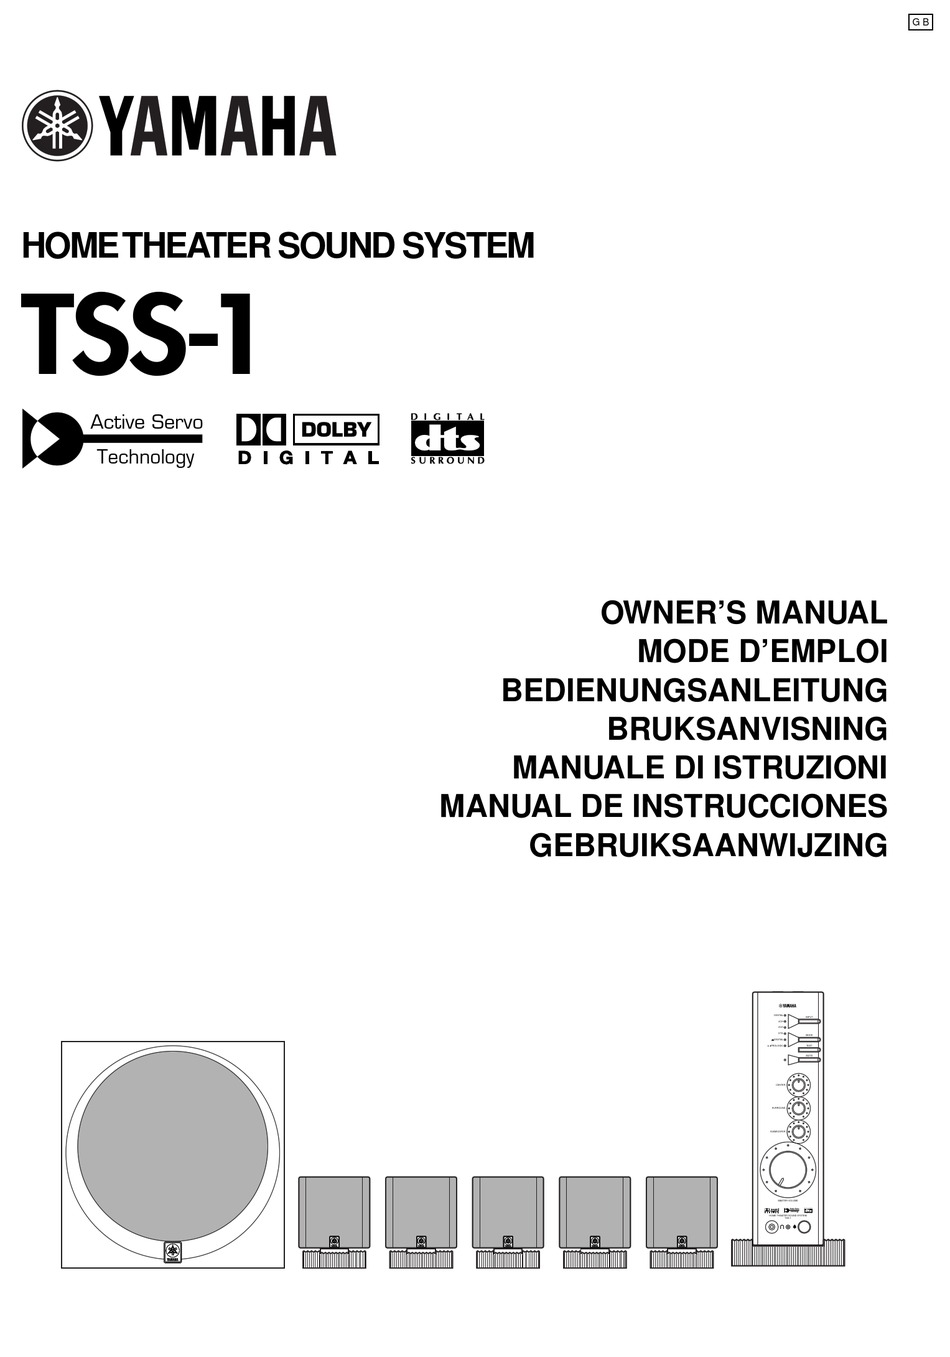 19+ Yamaha home theater sound system tss 1 info